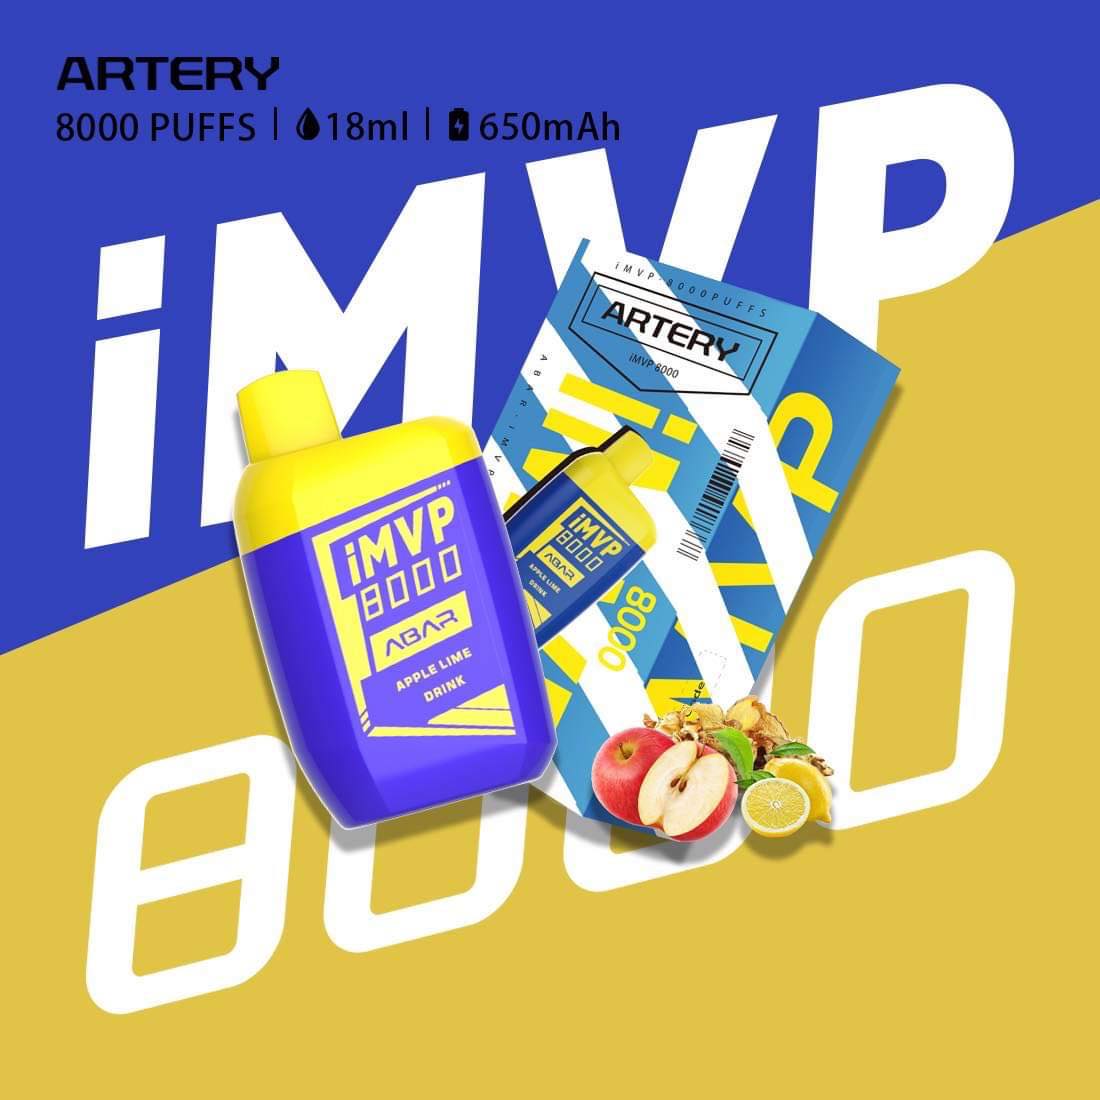 Arterie iMVP 8000 pust - 7 